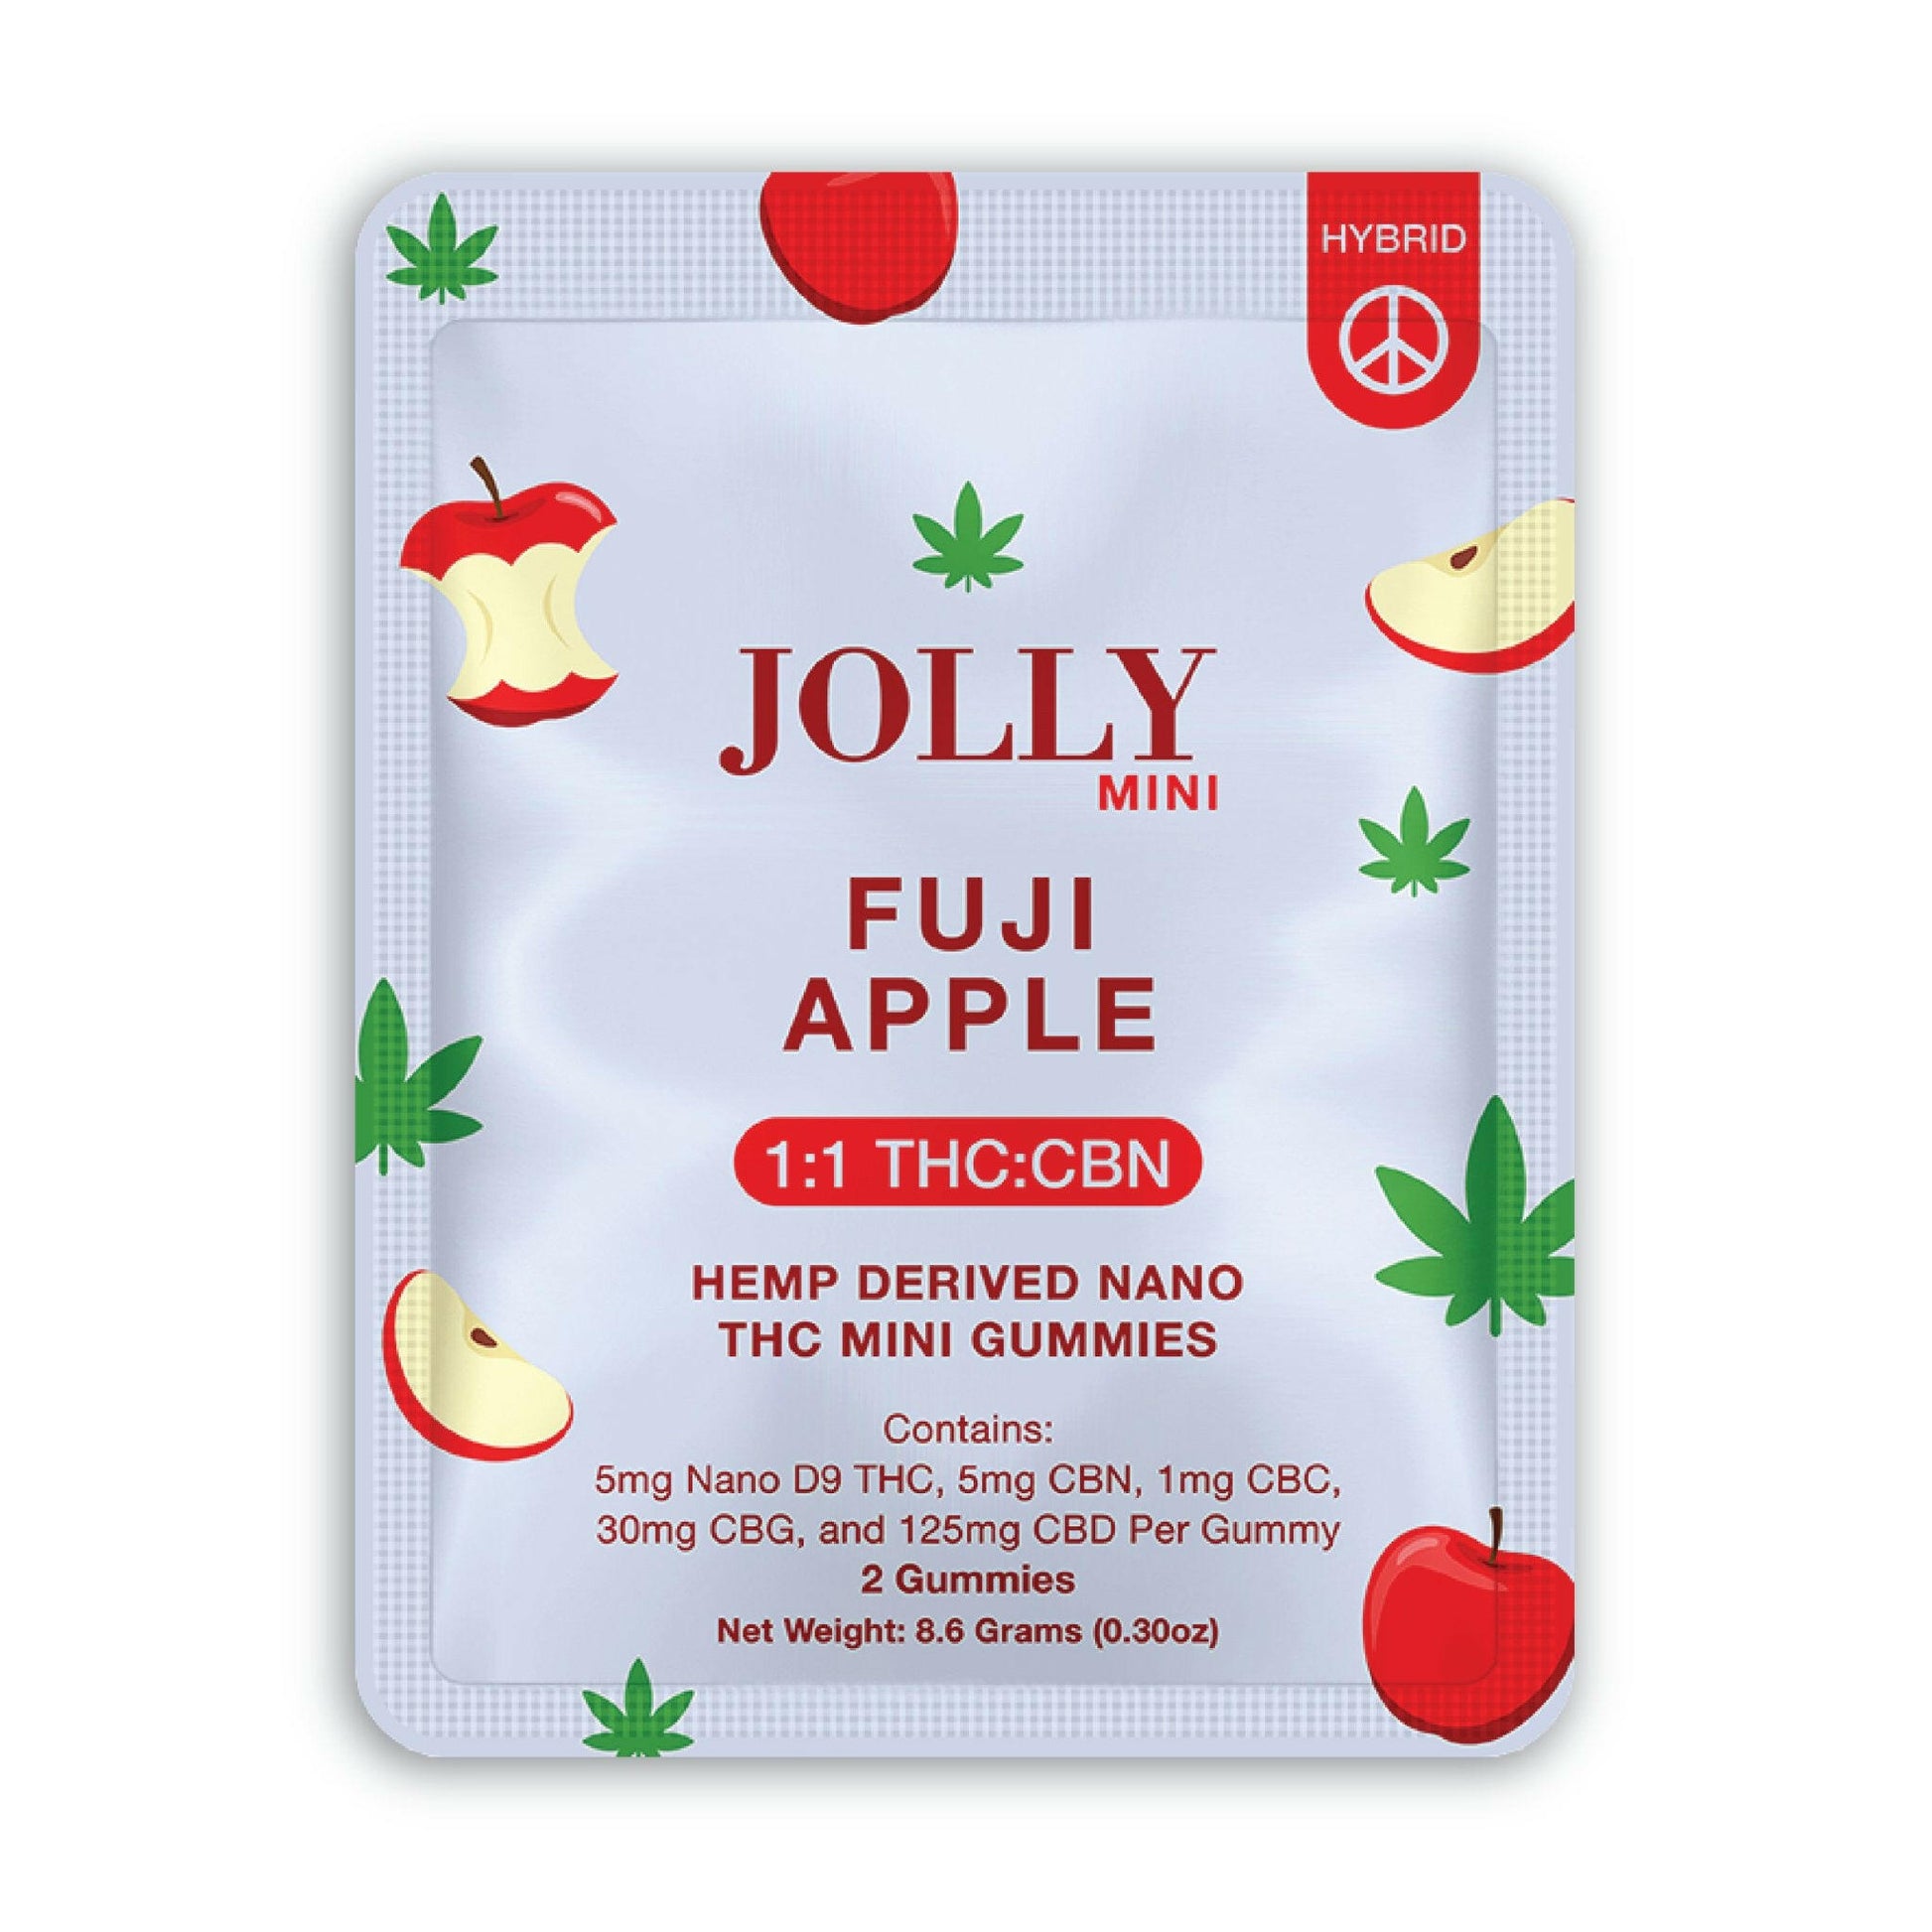 JOLLY - FUJI APPLE (HYBRID) - Mini Gummies